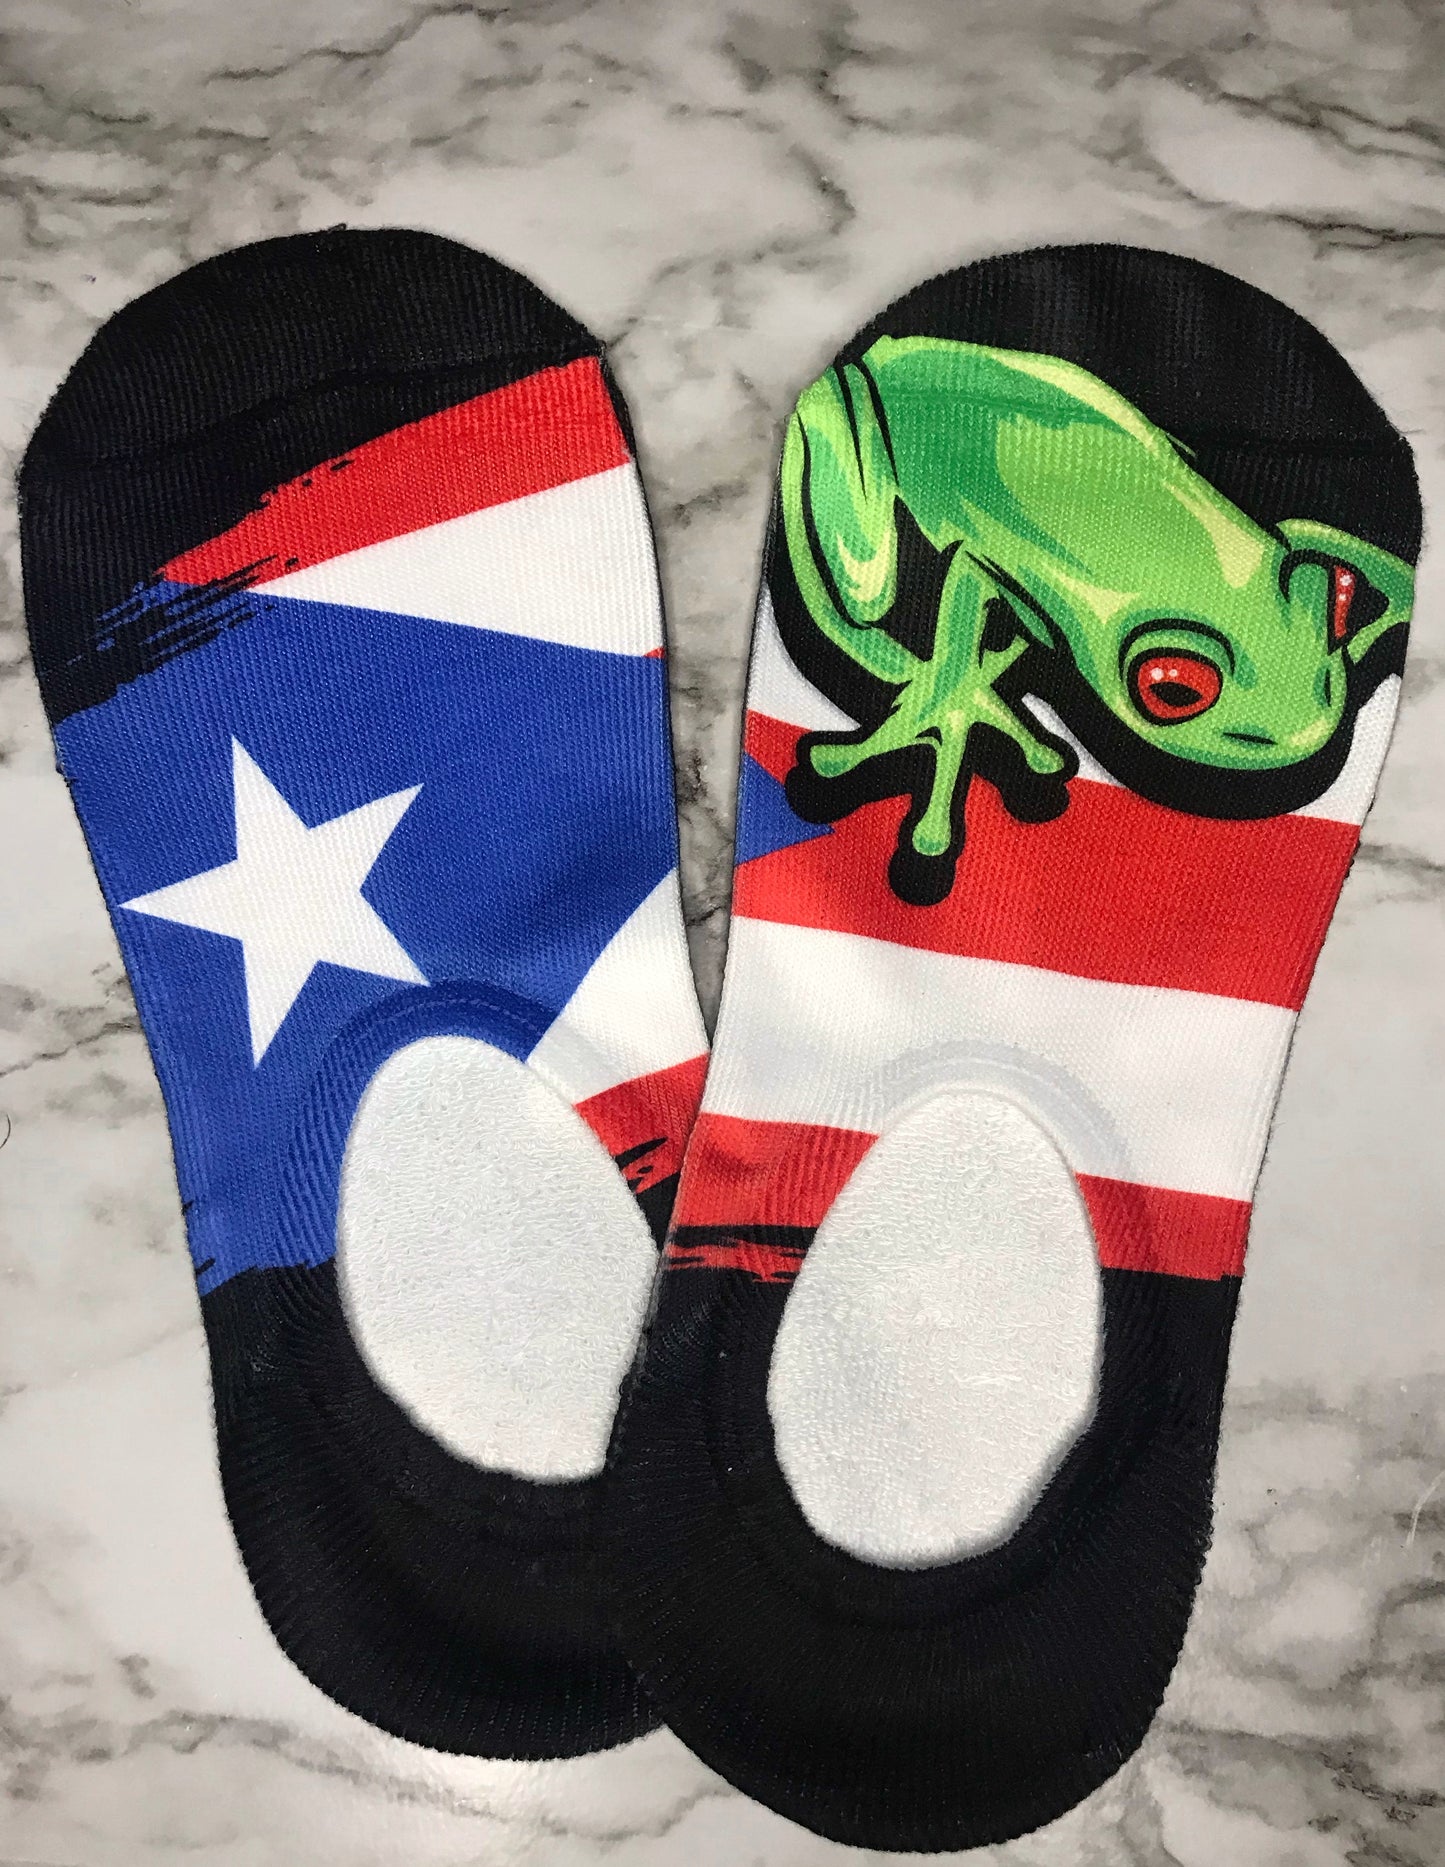 Coqui No show shocks (puertorican socks)